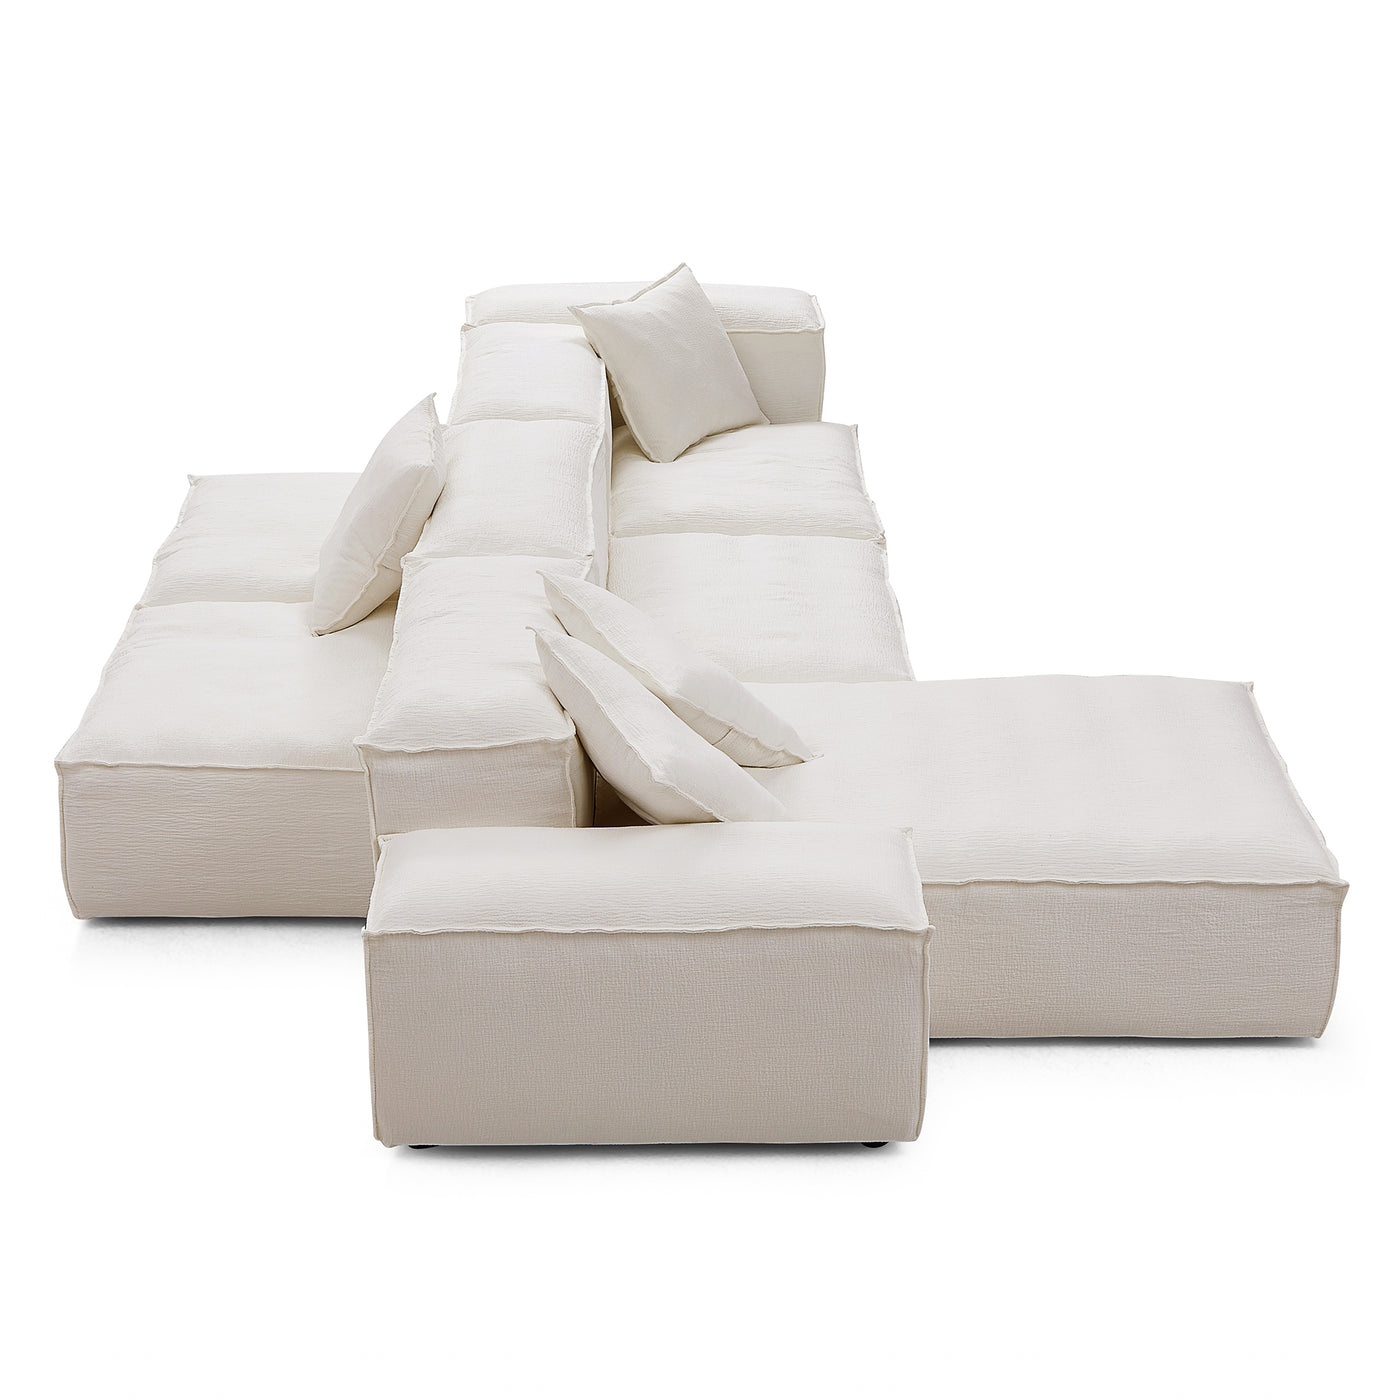 Freedom Modular Khaki Double Sided Sectional Sofa-White-hidden